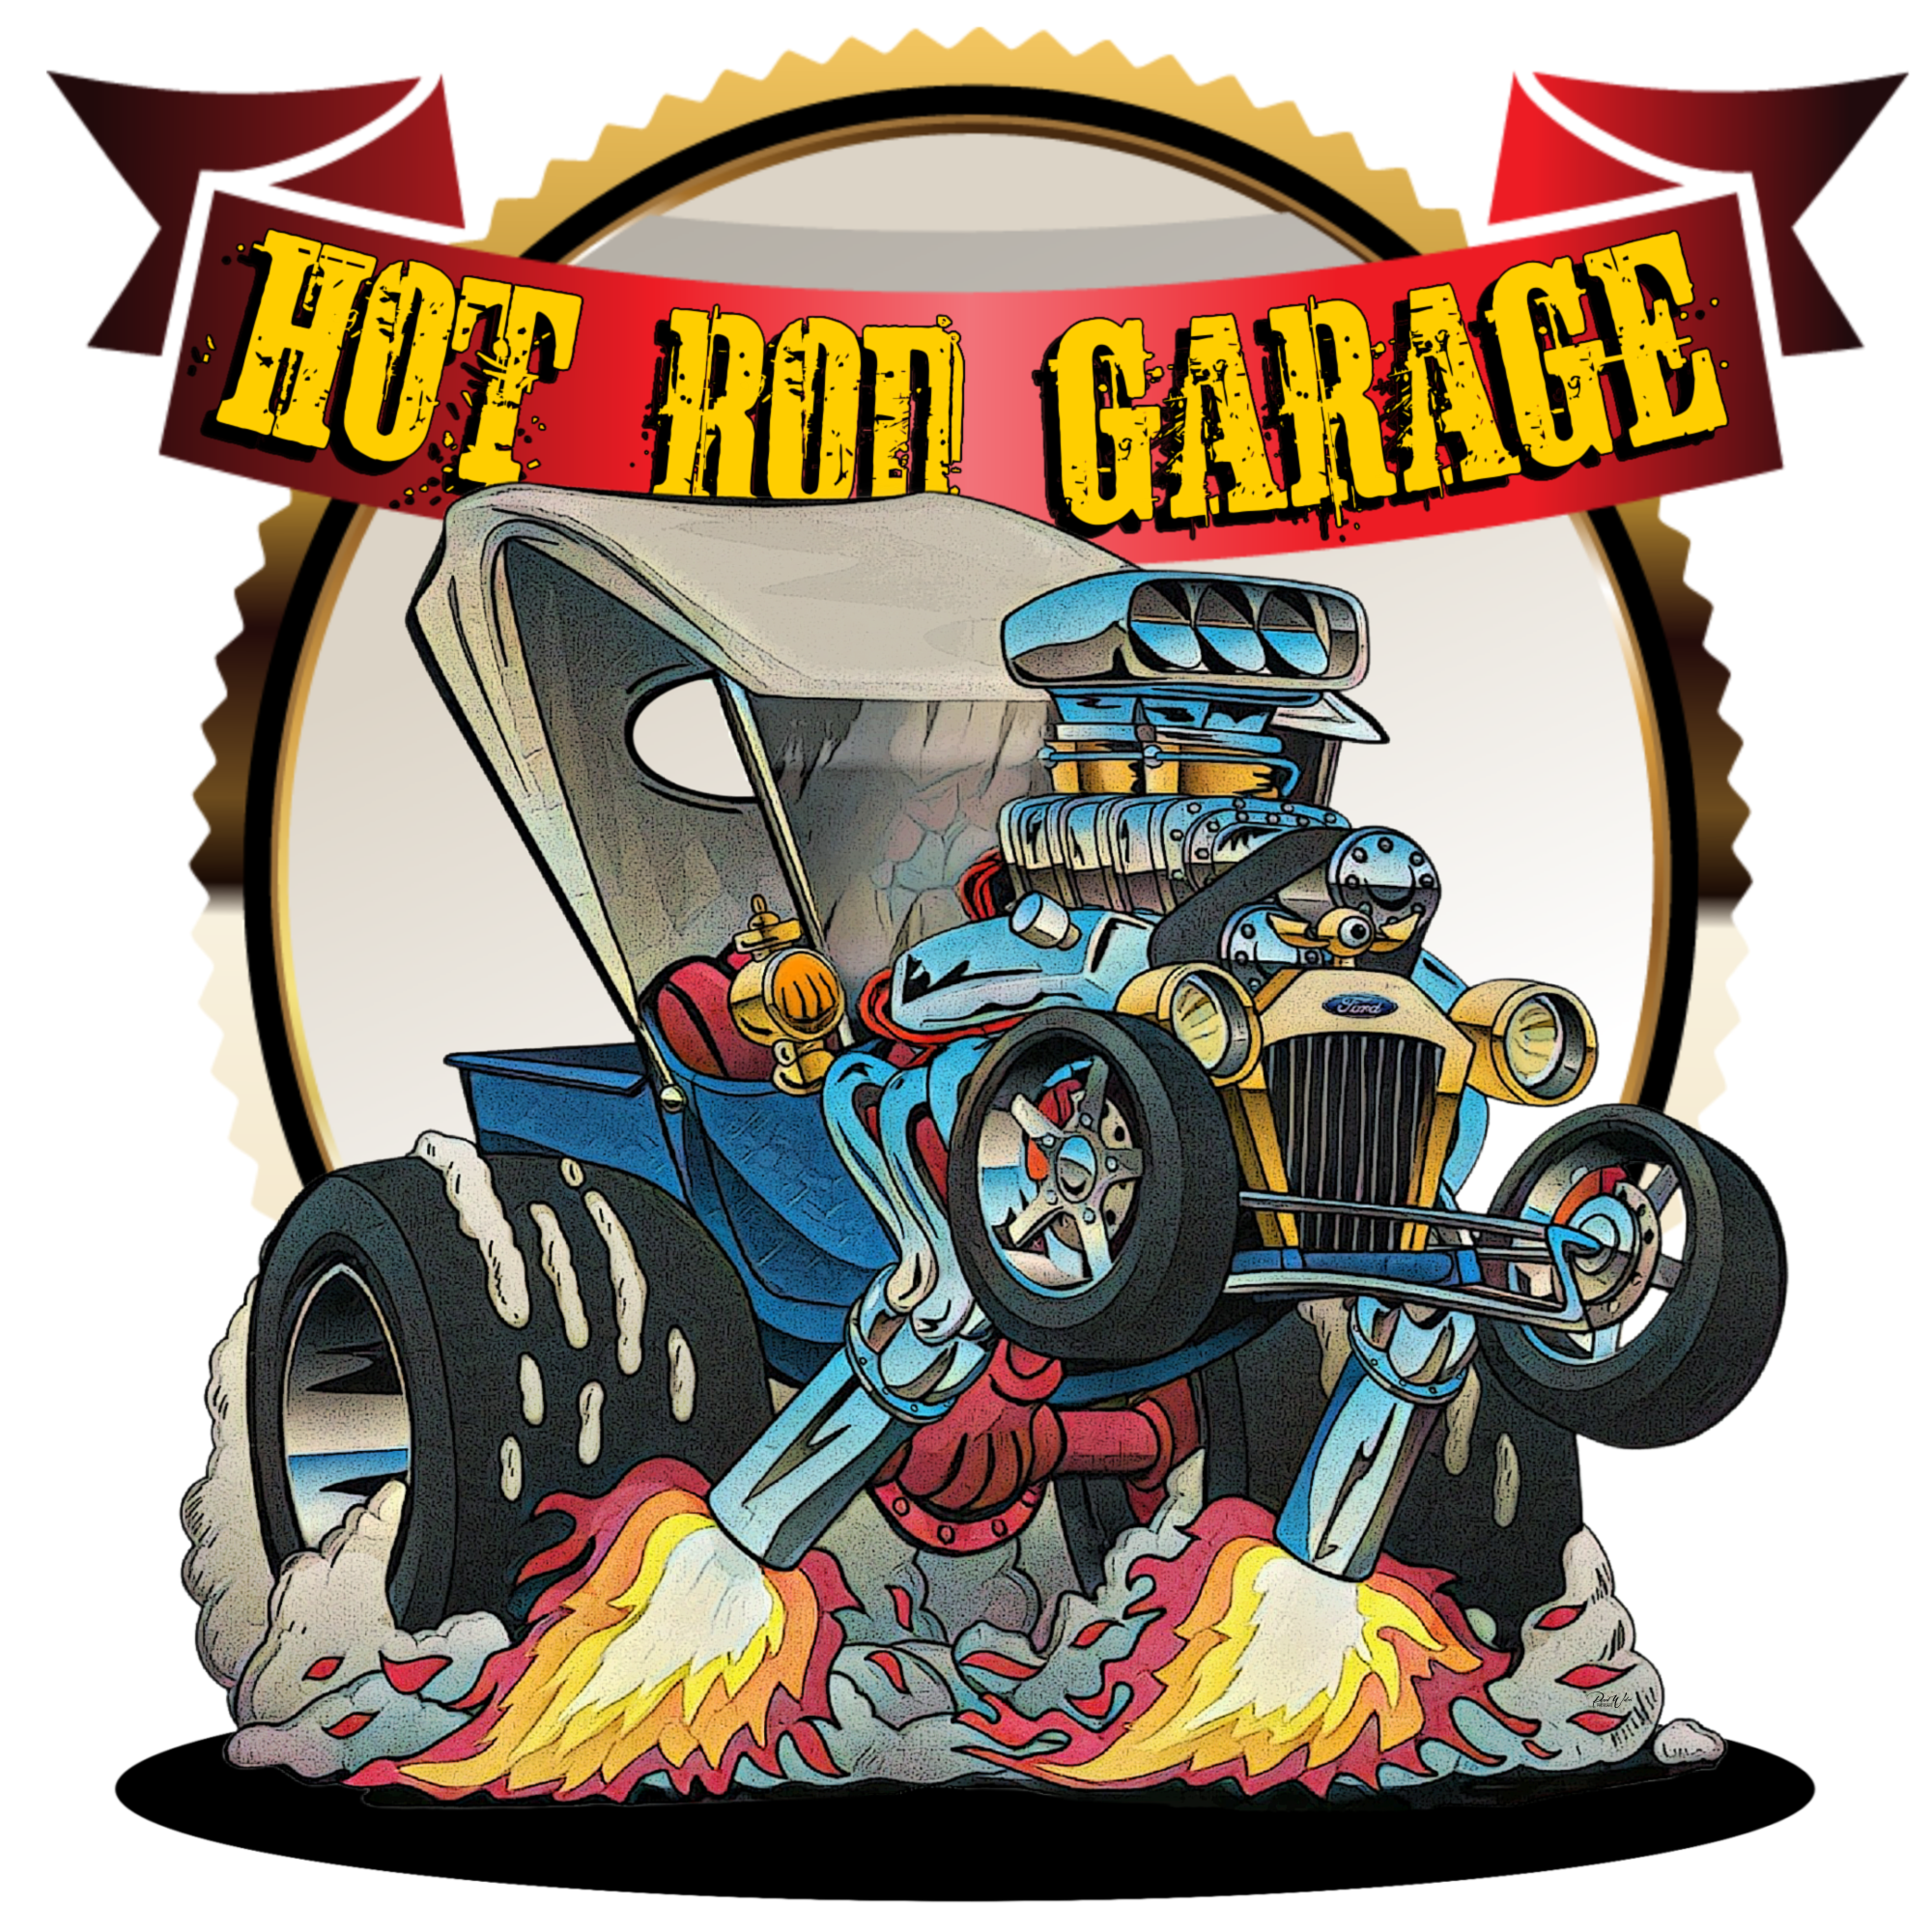 Hot Rod Garage - Ford Pickup Cartoon Style - Image